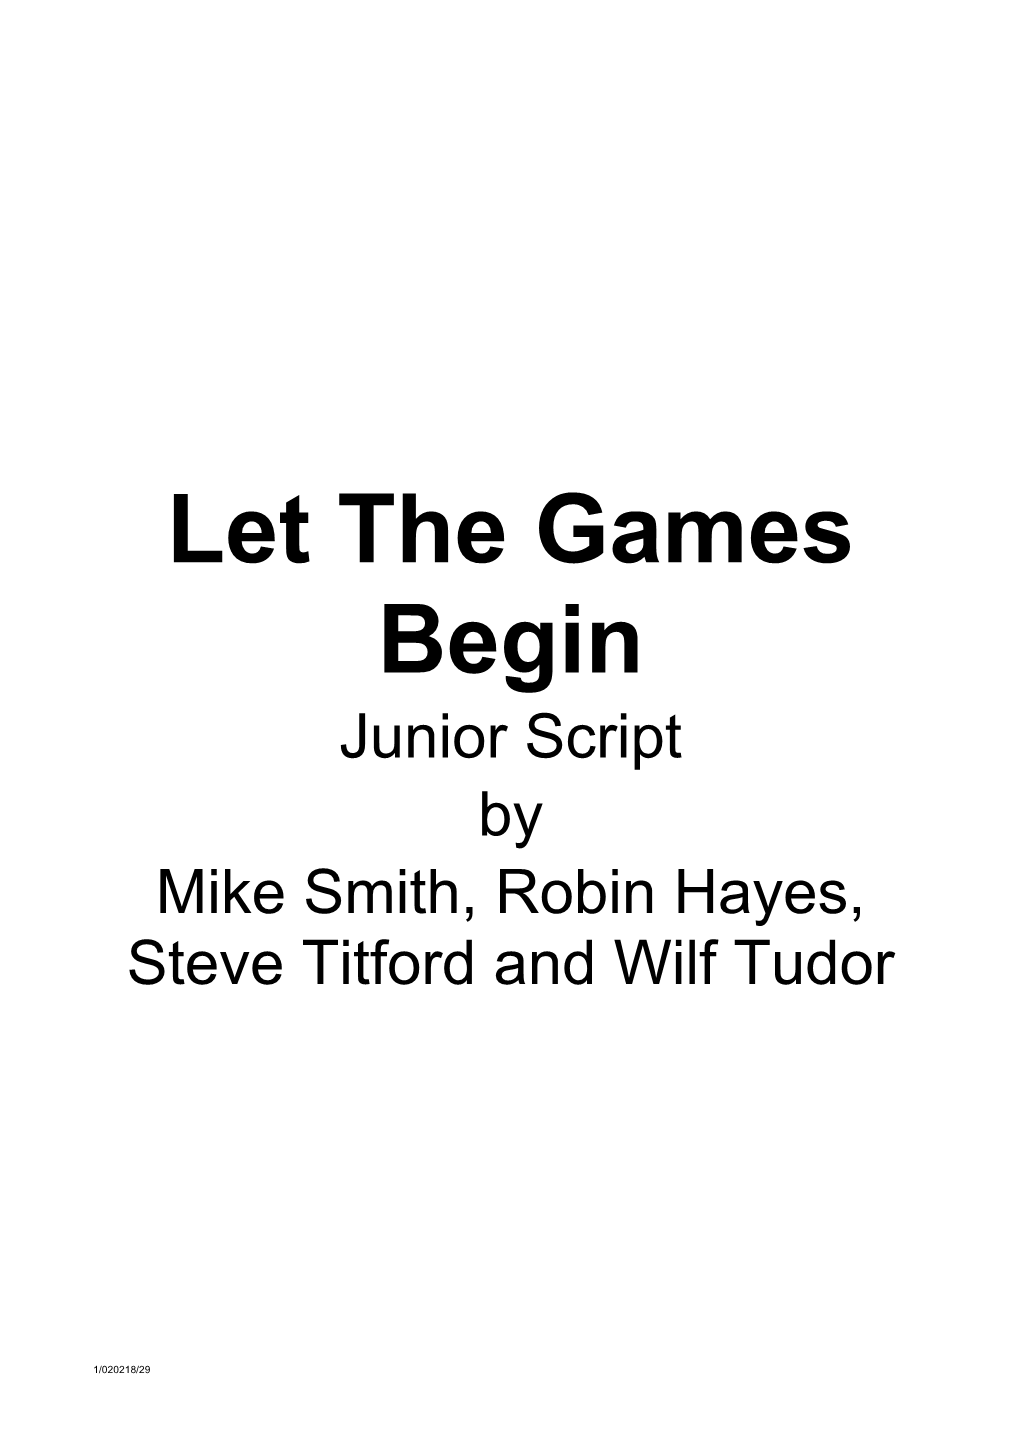 Let the Games Begin Script